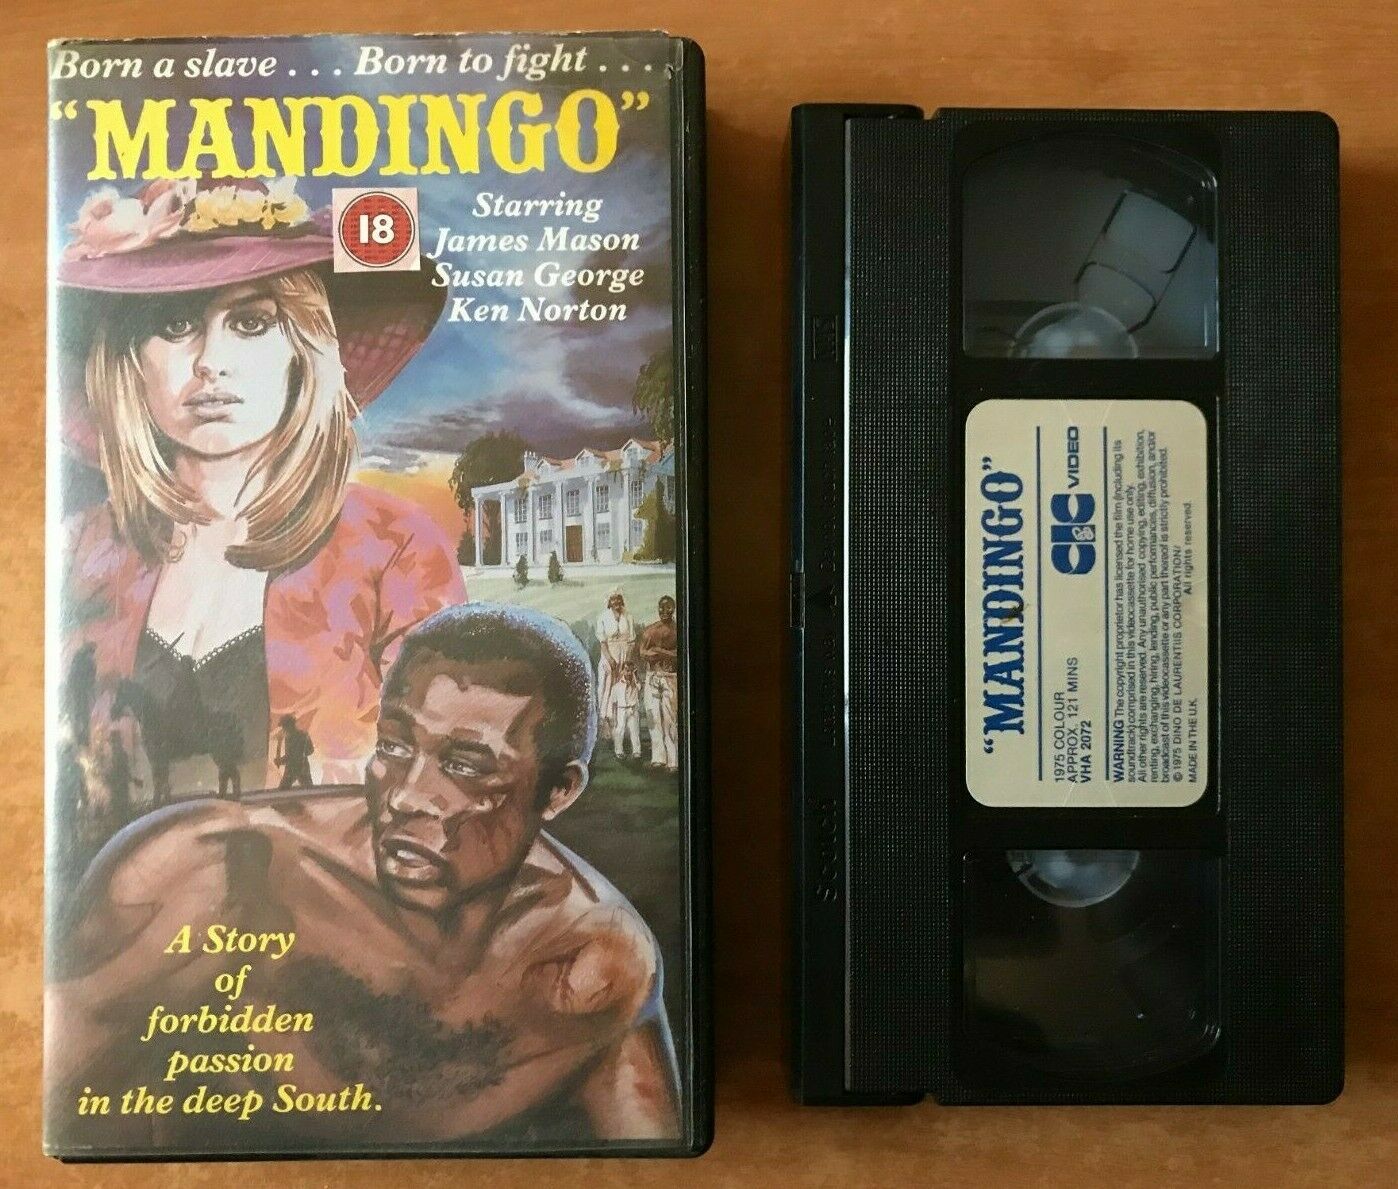 Mandingo (1975); [CIC Video]: Rough Historical Drama/Stallone Plays Extra - VHS-